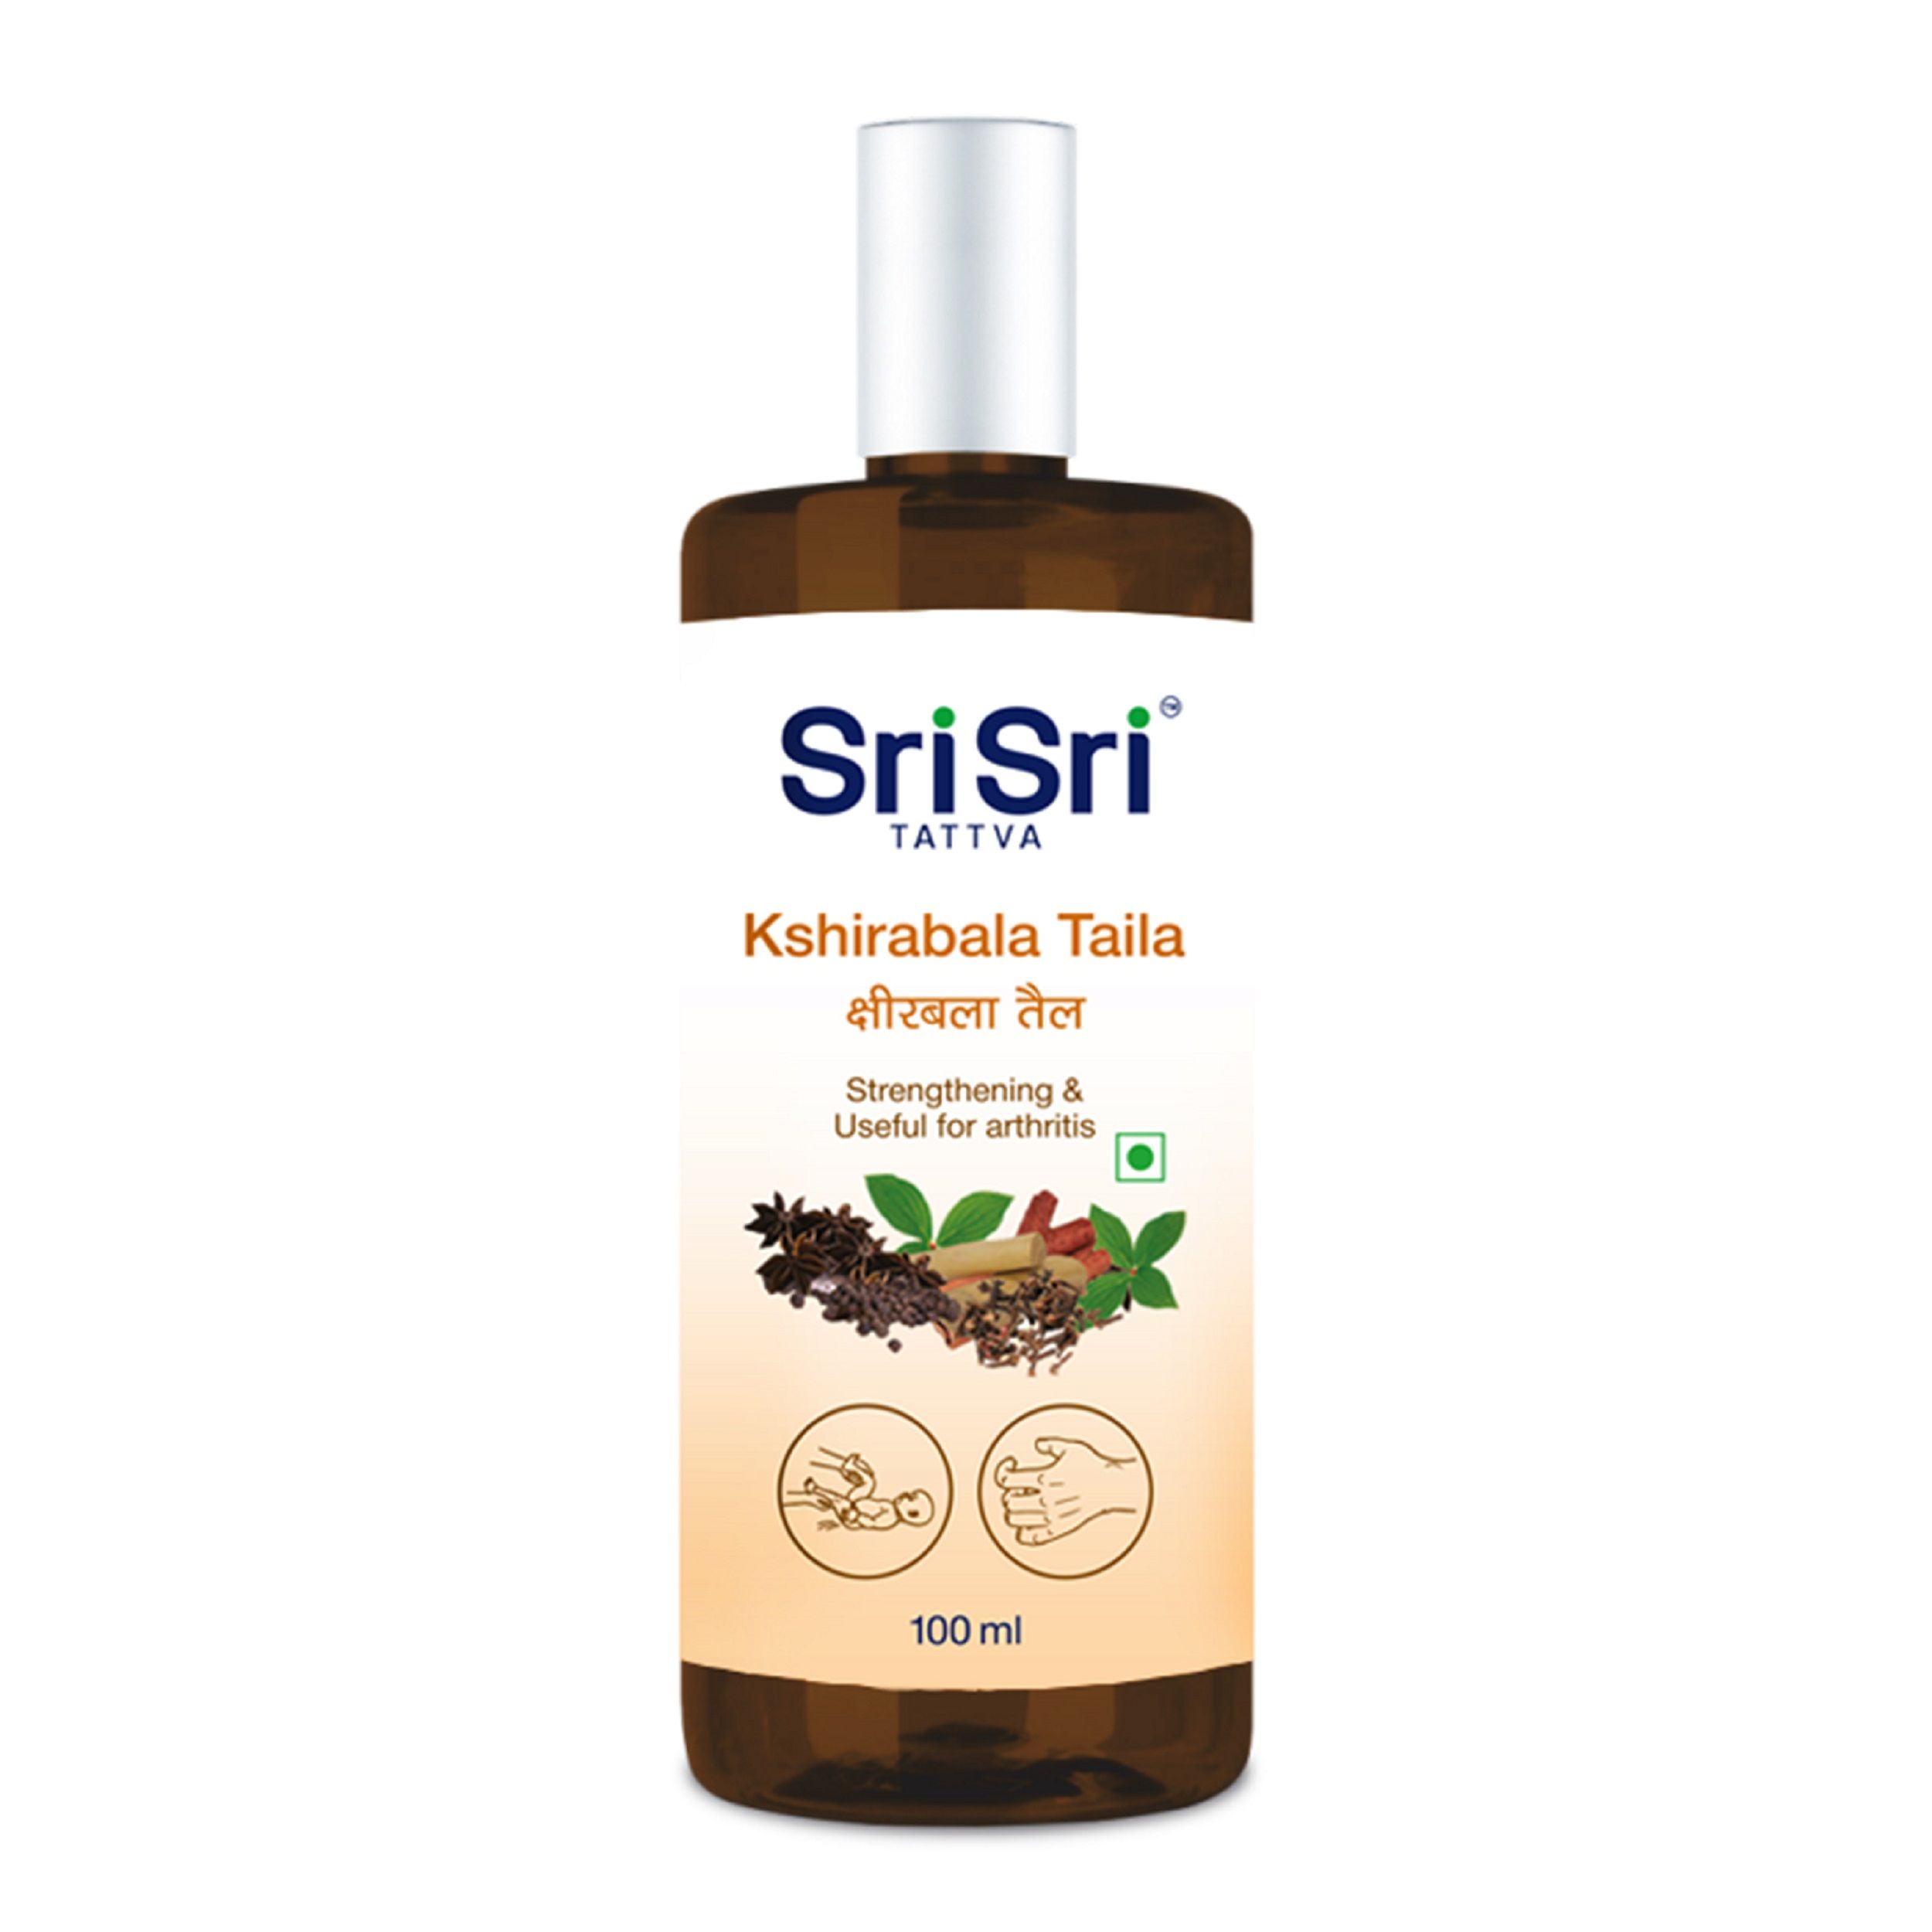 Sri Sri Tattva Kshirabala Taila Useful For Arthritis